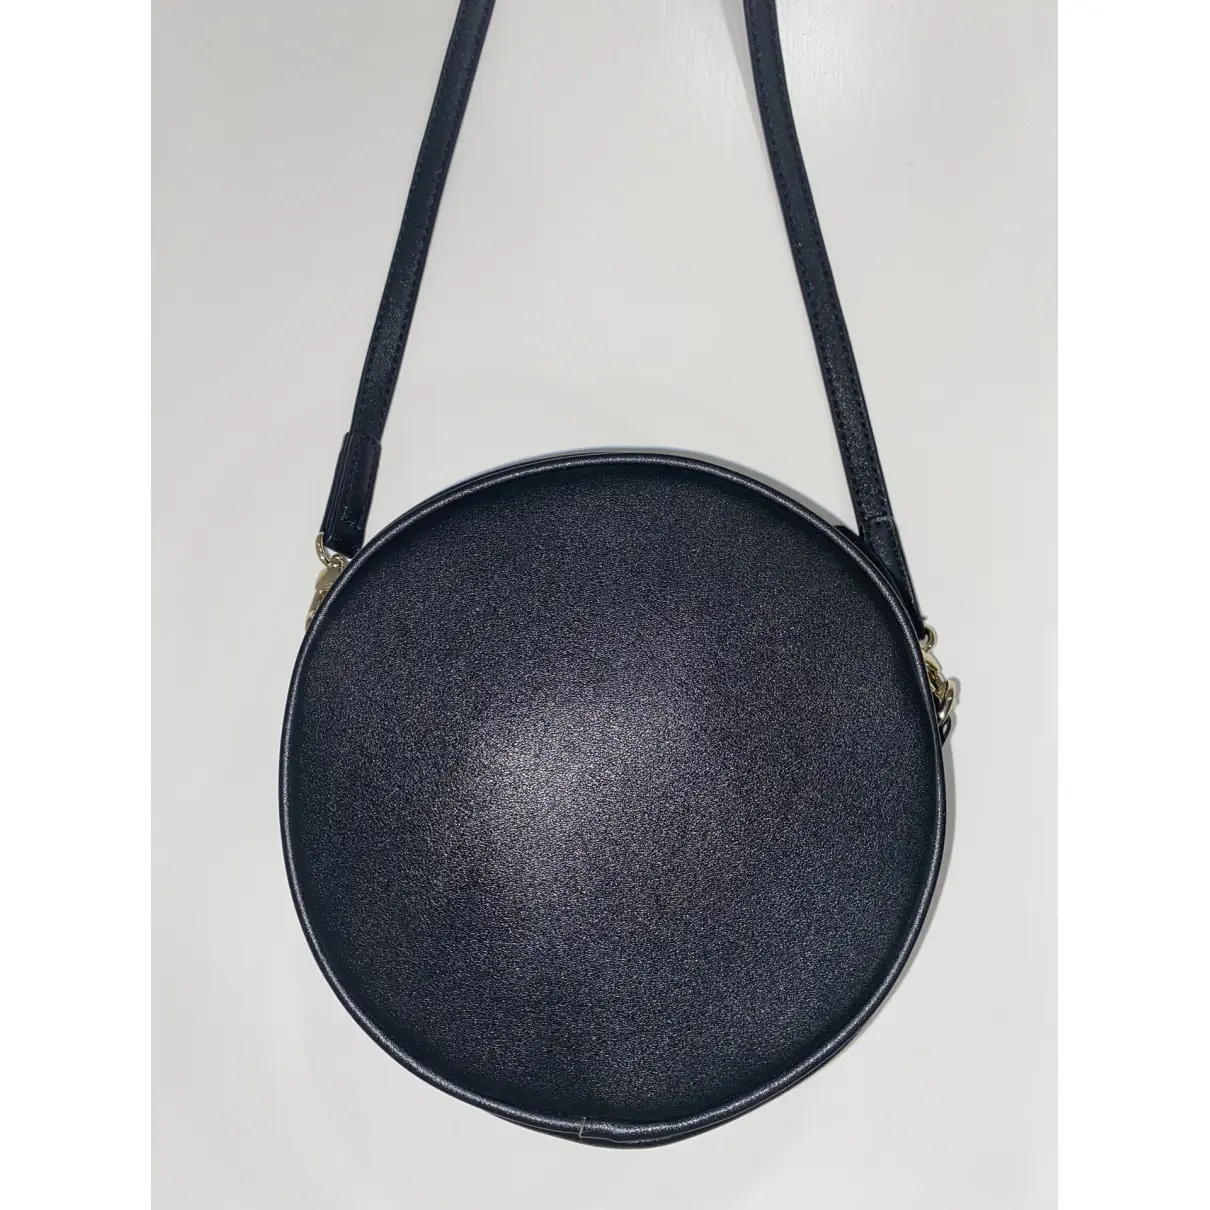 Buy Versace Jeans Couture Leather handbag online